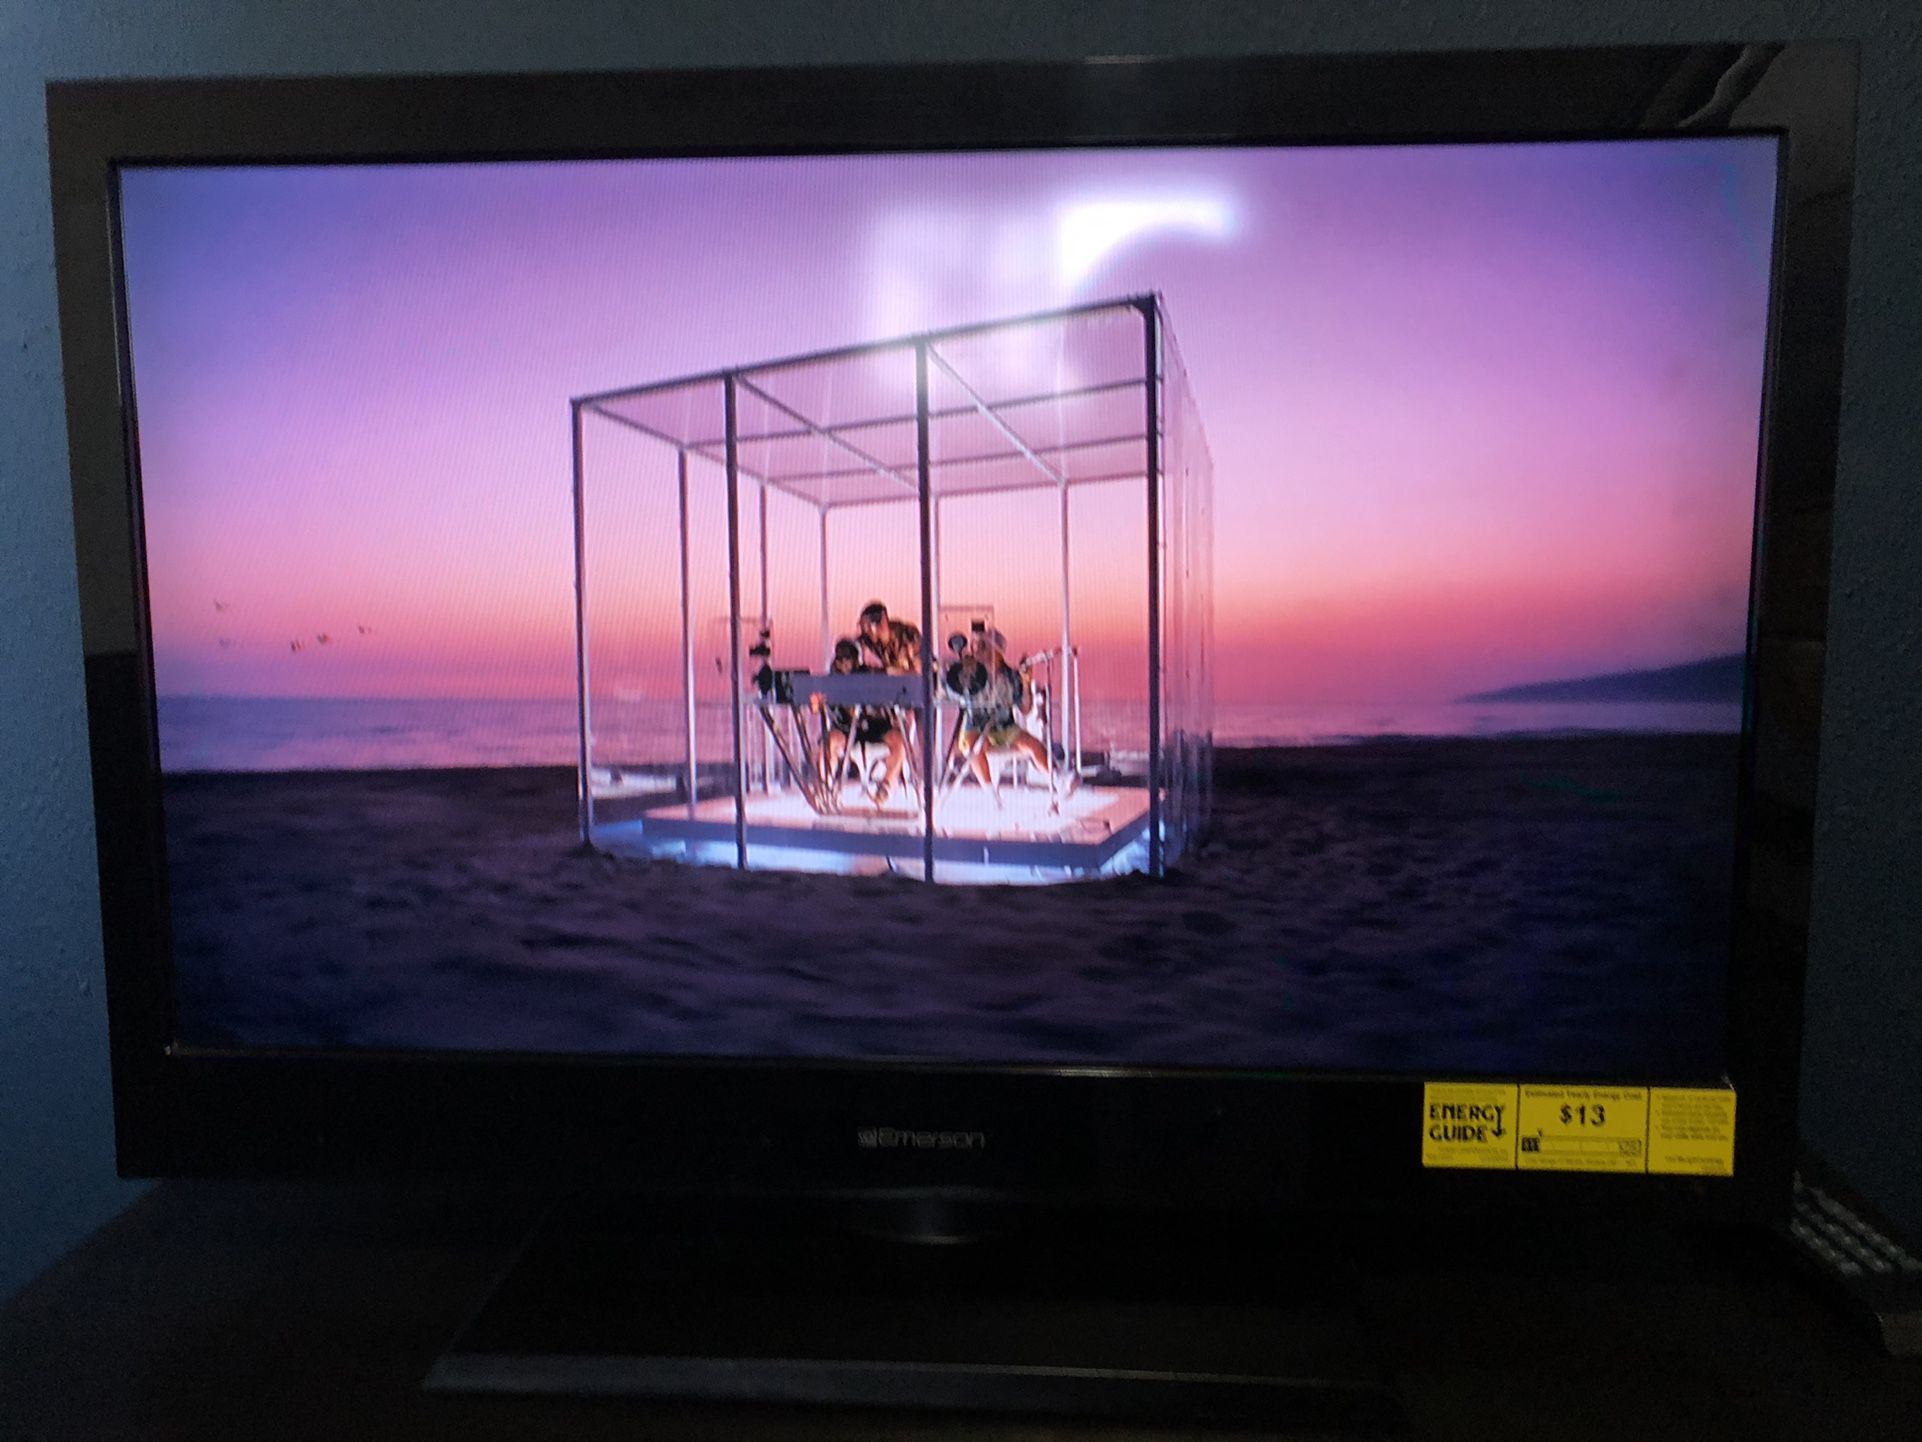 Black Emerson 32” Inch HDTV Flatscreen